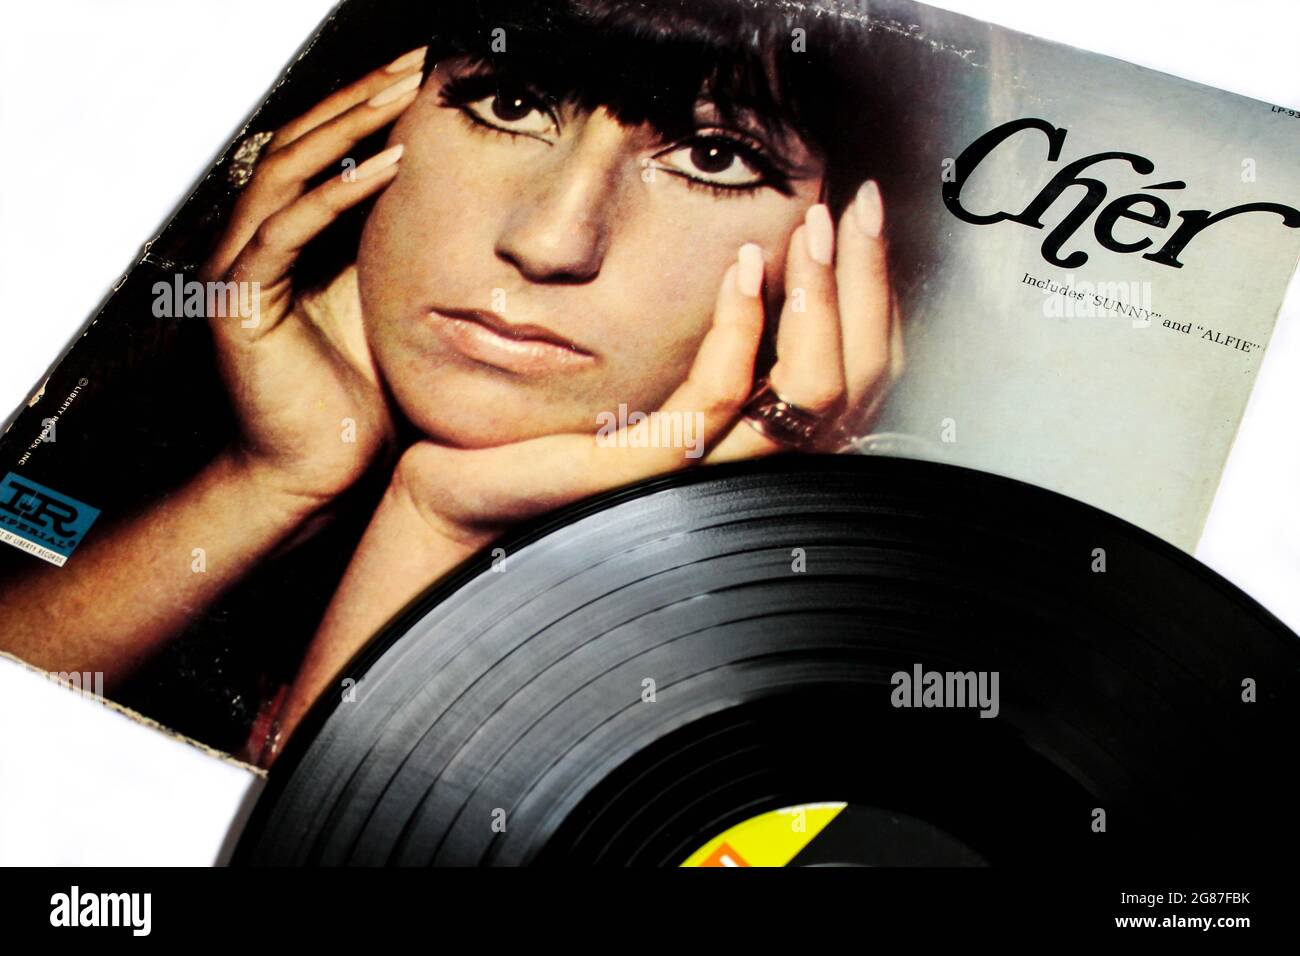 Pop and folk artist, Cher music album on vinyl record LP disc. Titled: Chér (Self titled, Cher) album Stock Photo